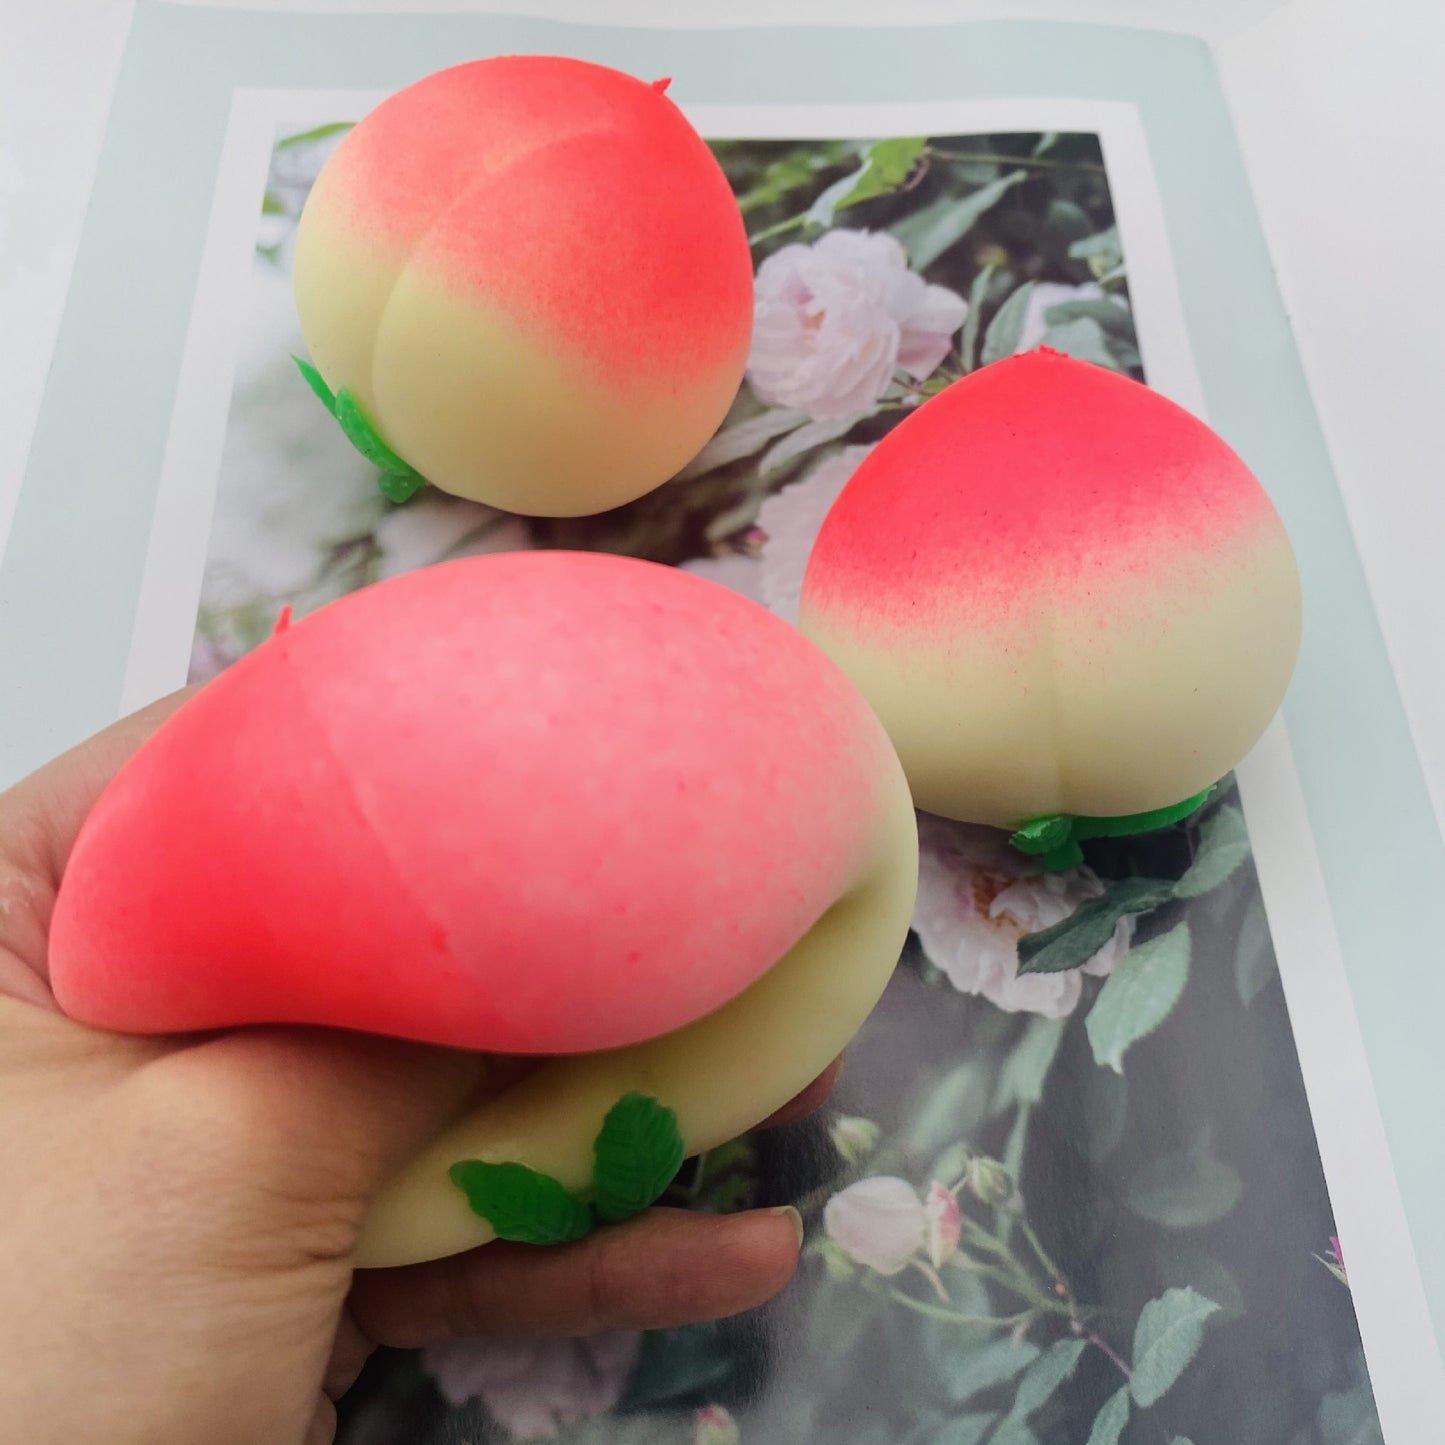 Soft Rubber Peach Vent Ball Fruit Squeeze Music